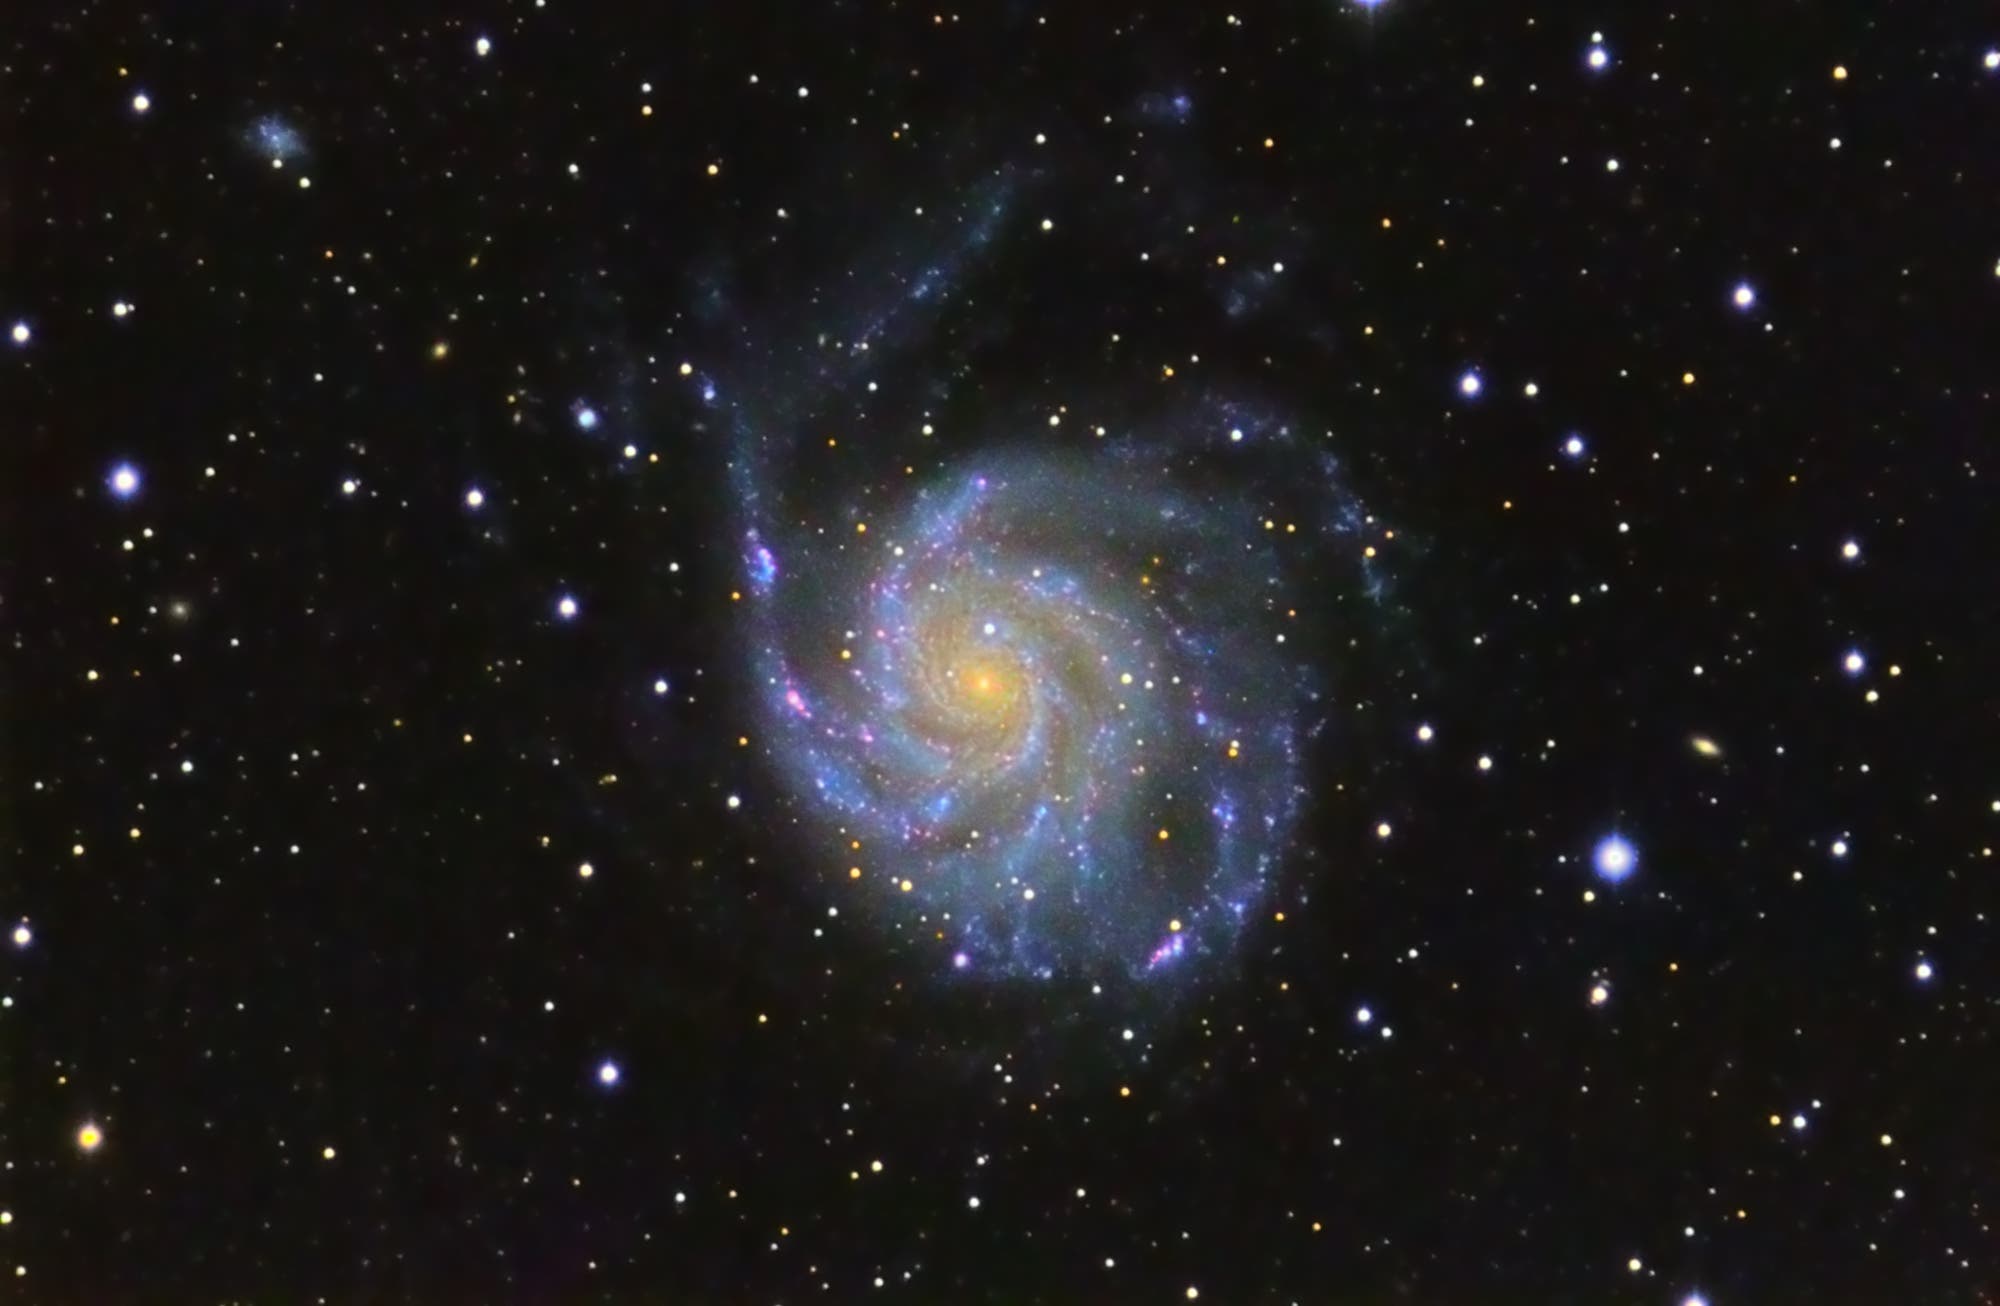 Feuerradgalaxie - M 101